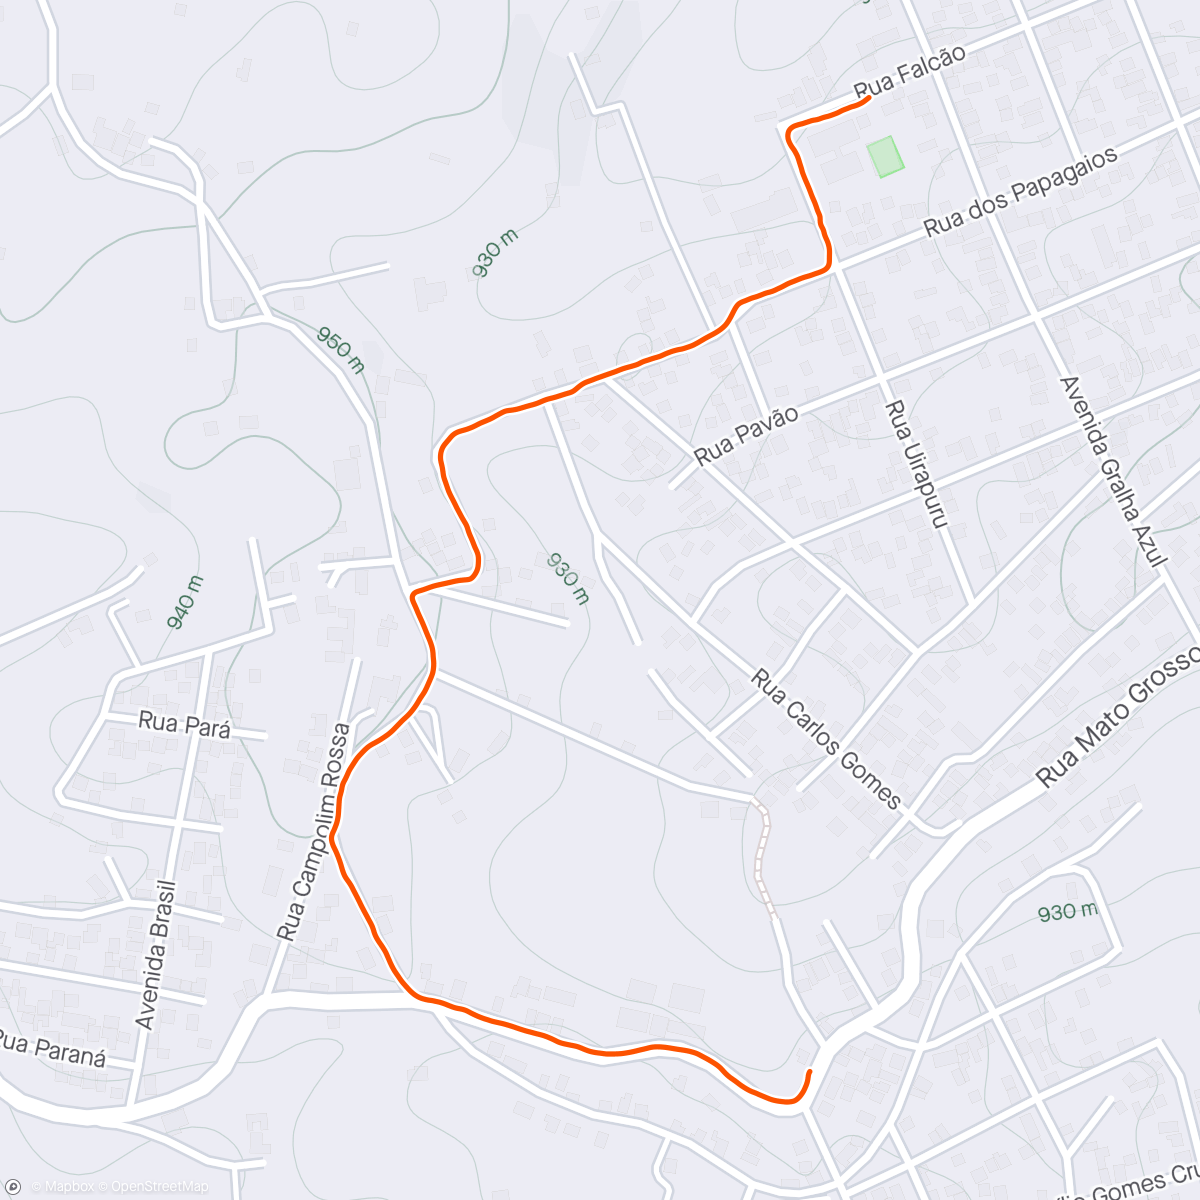 「Caminhada vespertina」活動的地圖